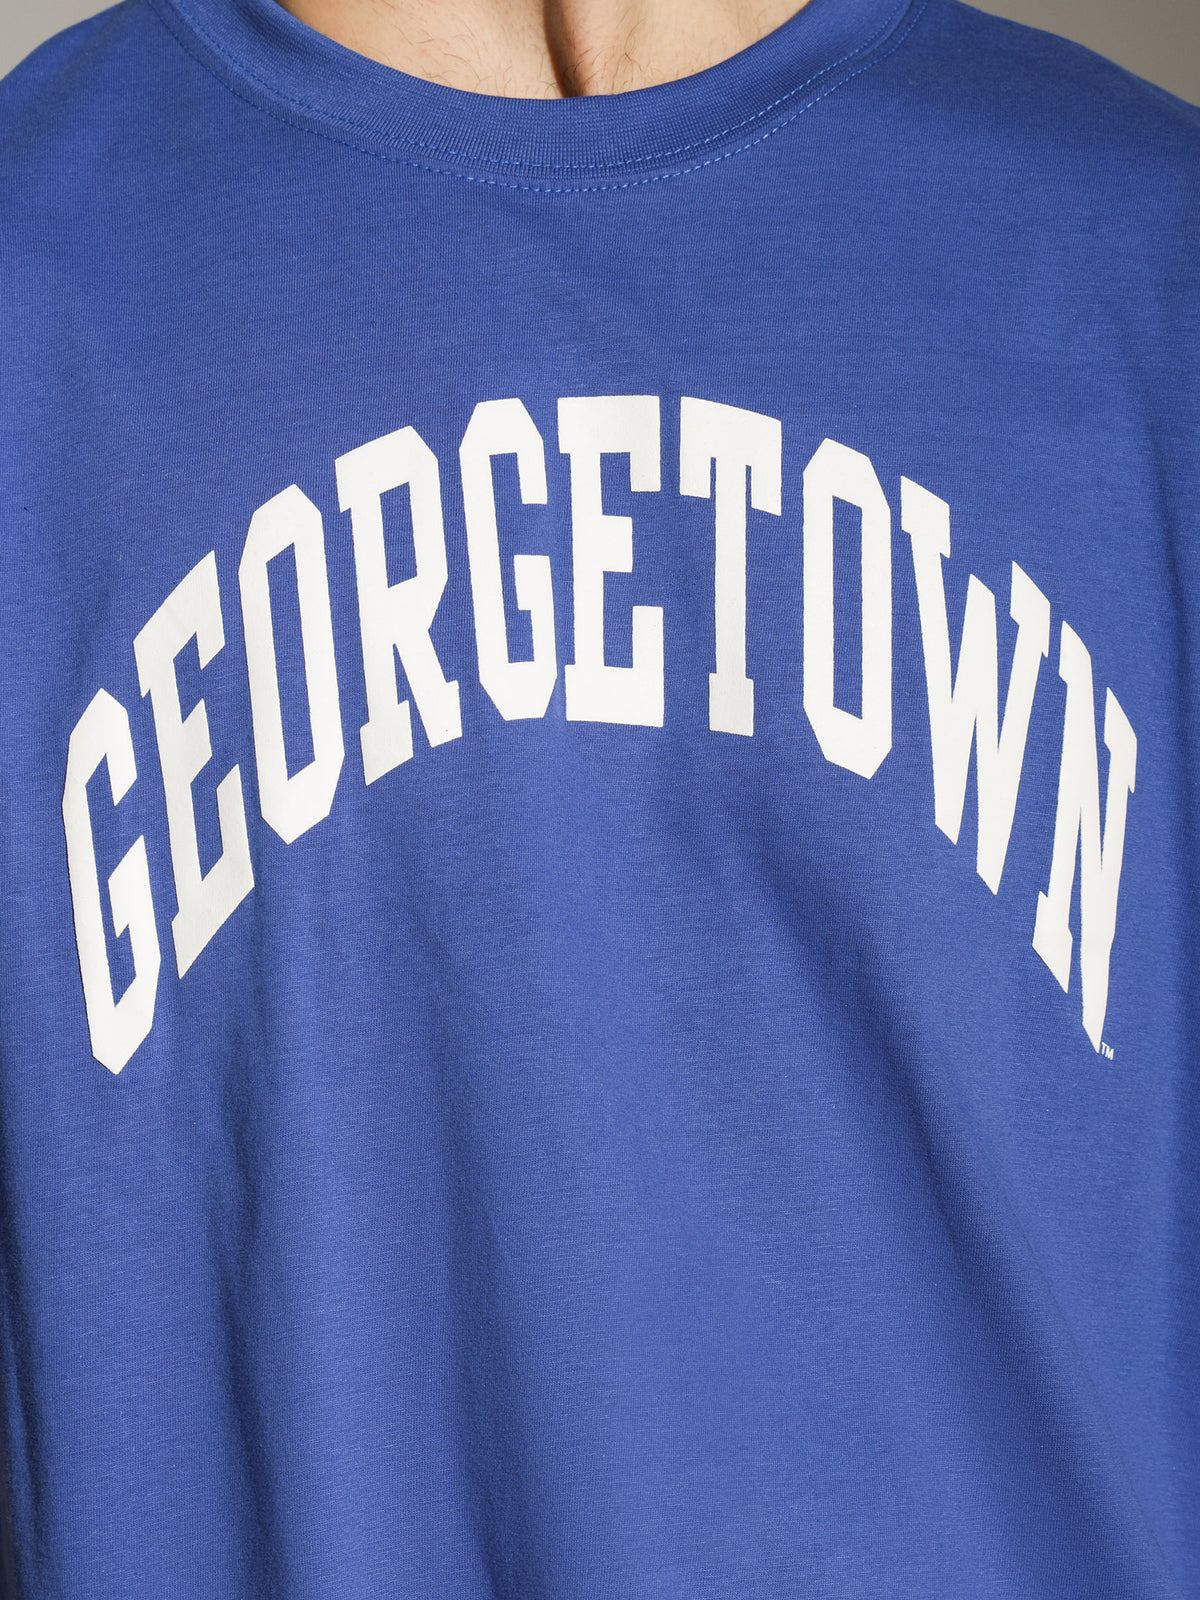 University Of Georgetown Workmark T-Shirt in Royal Blue